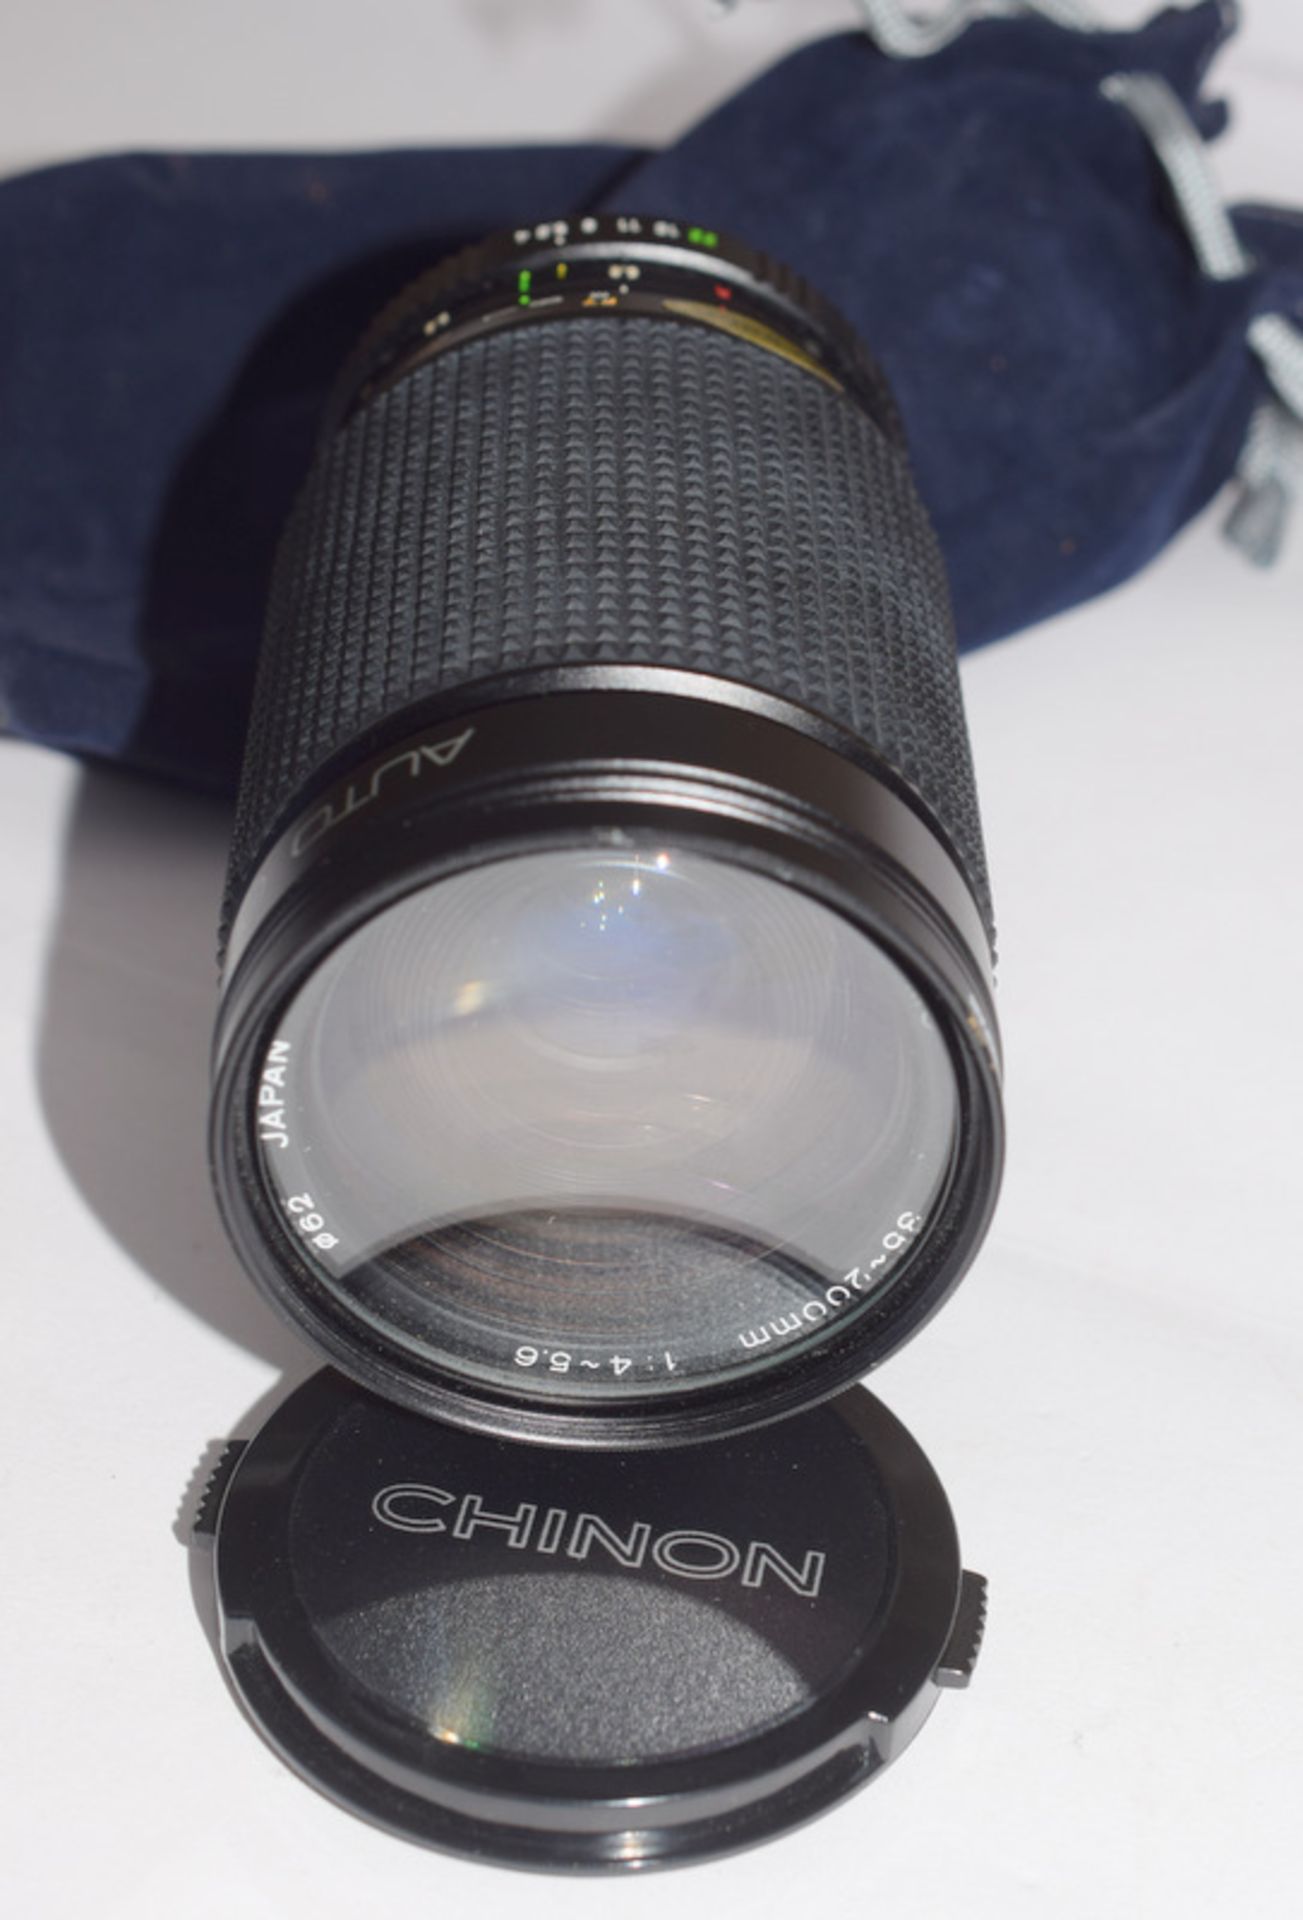 Auto Chinon Zoom Lens In Soft Case